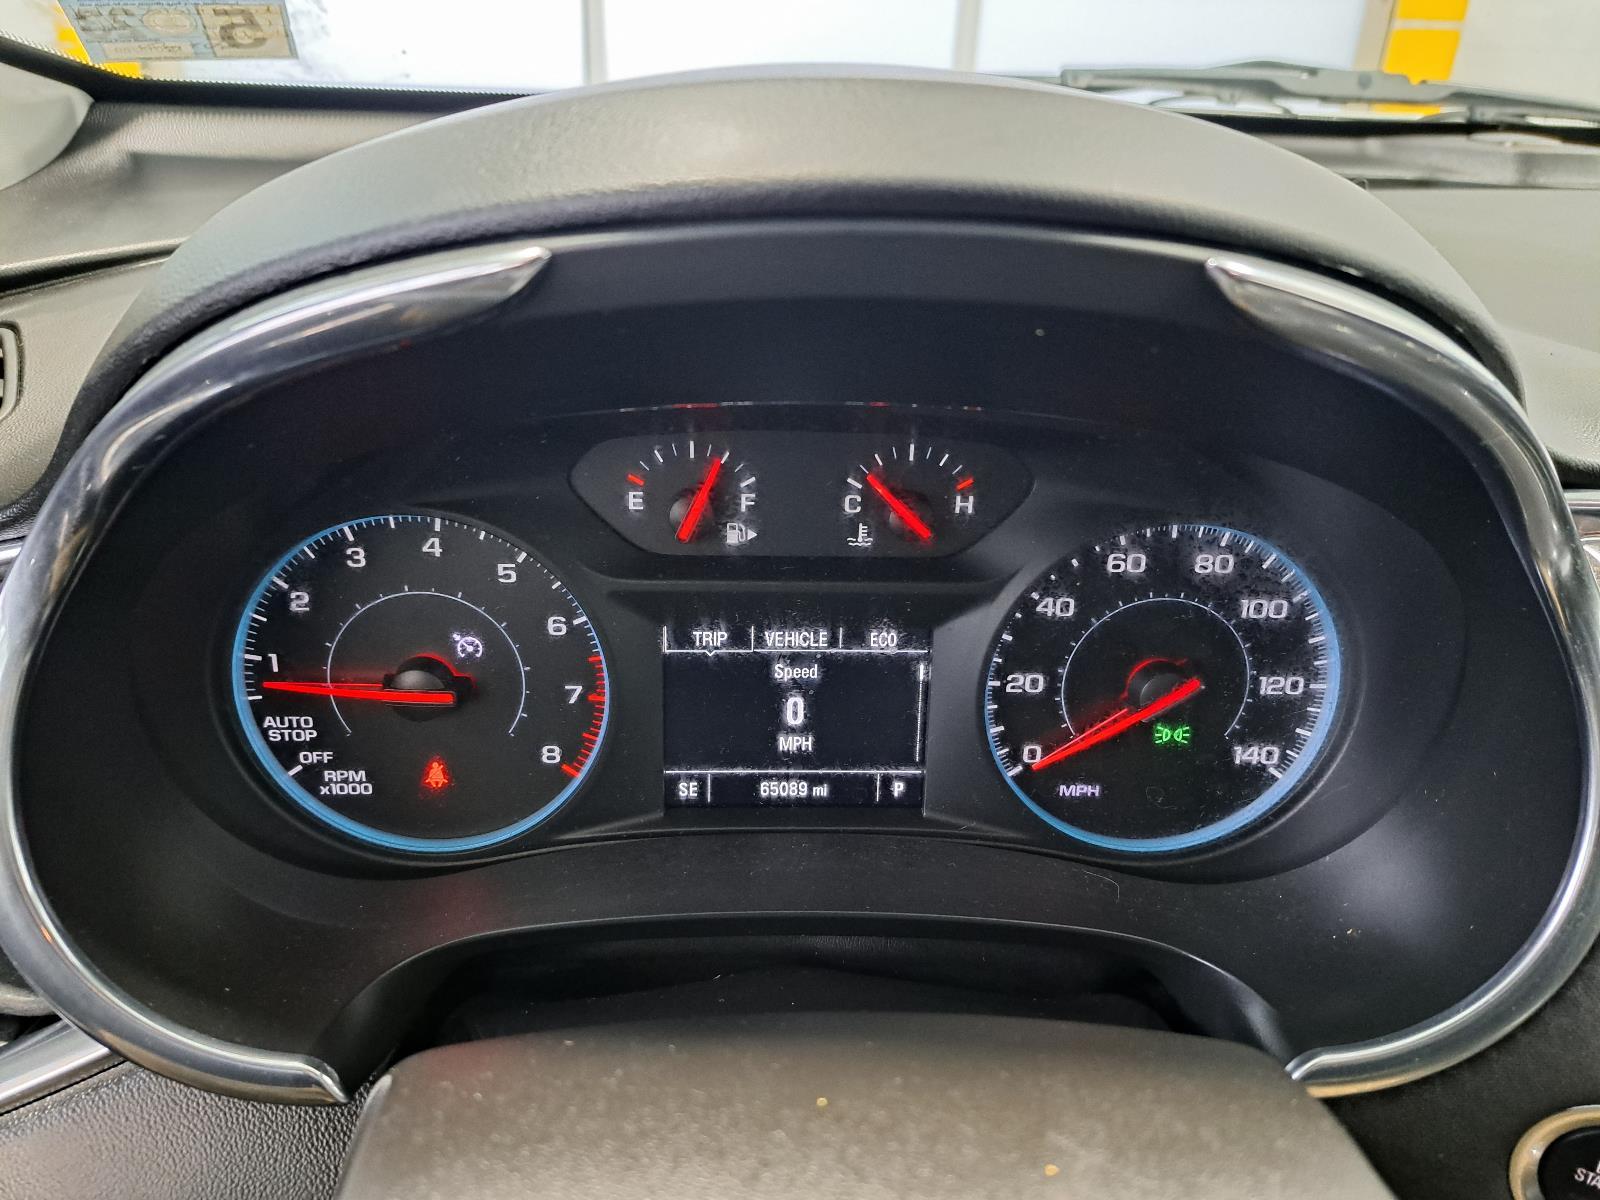 2017 Chevrolet Malibu LT Sedan 4 Dr. Front Wheel Drive 9